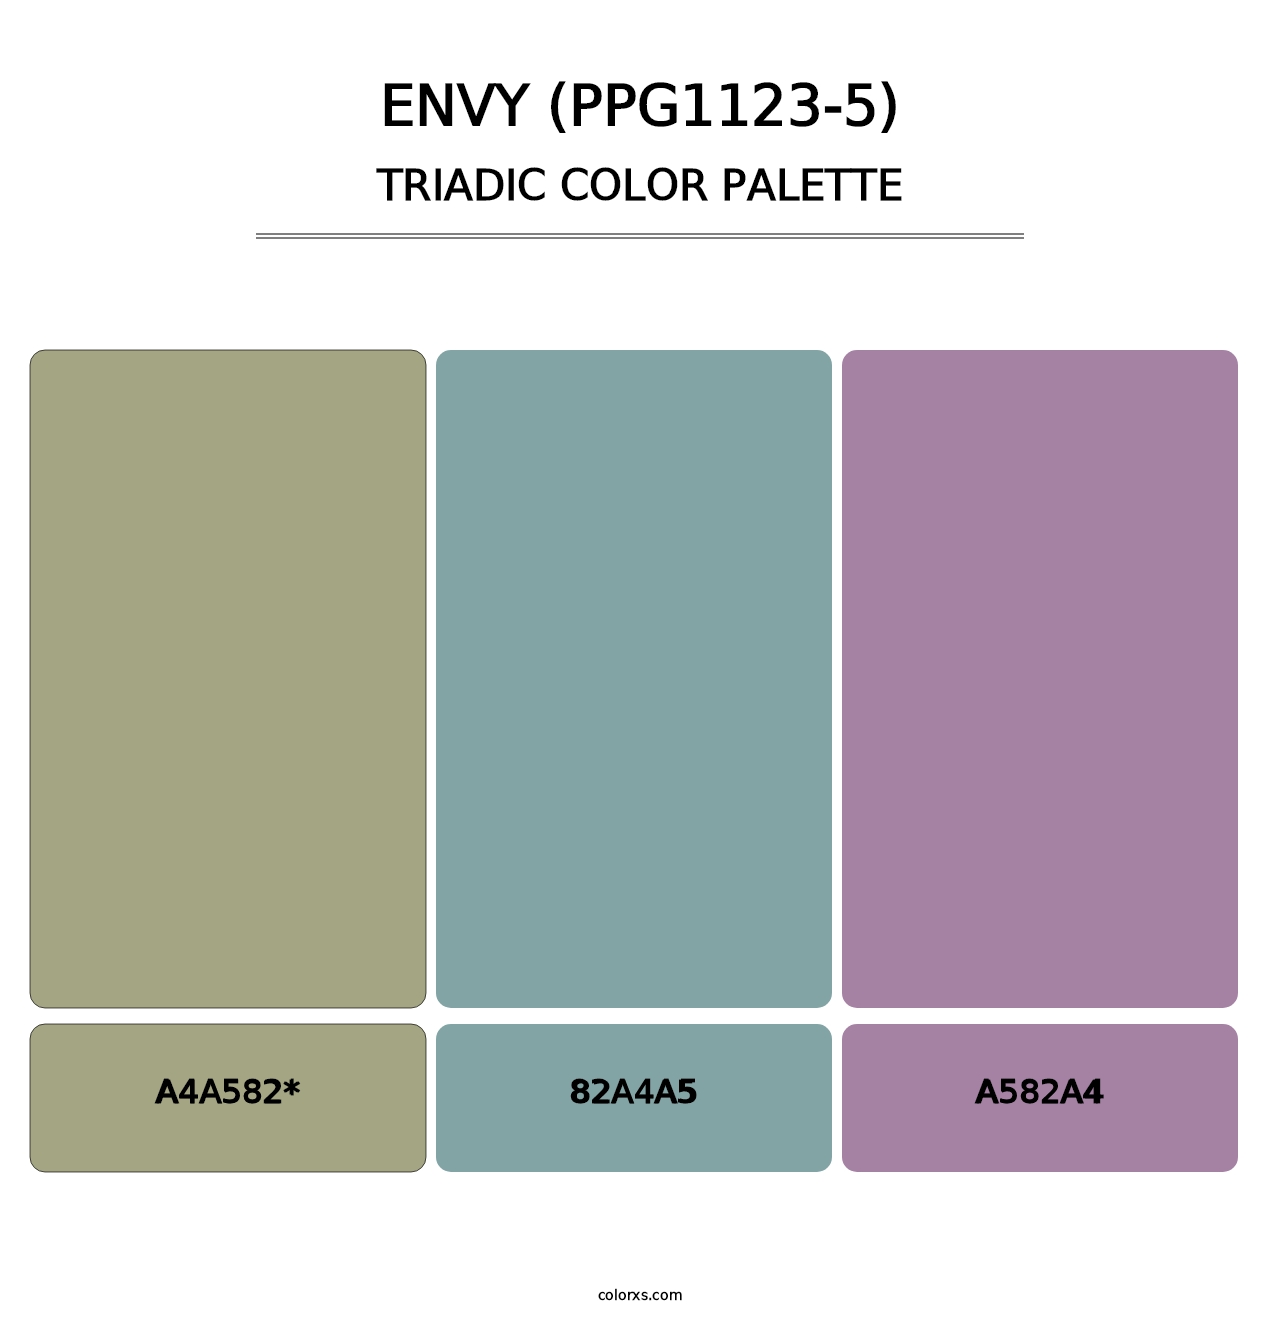 Envy (PPG1123-5) - Triadic Color Palette